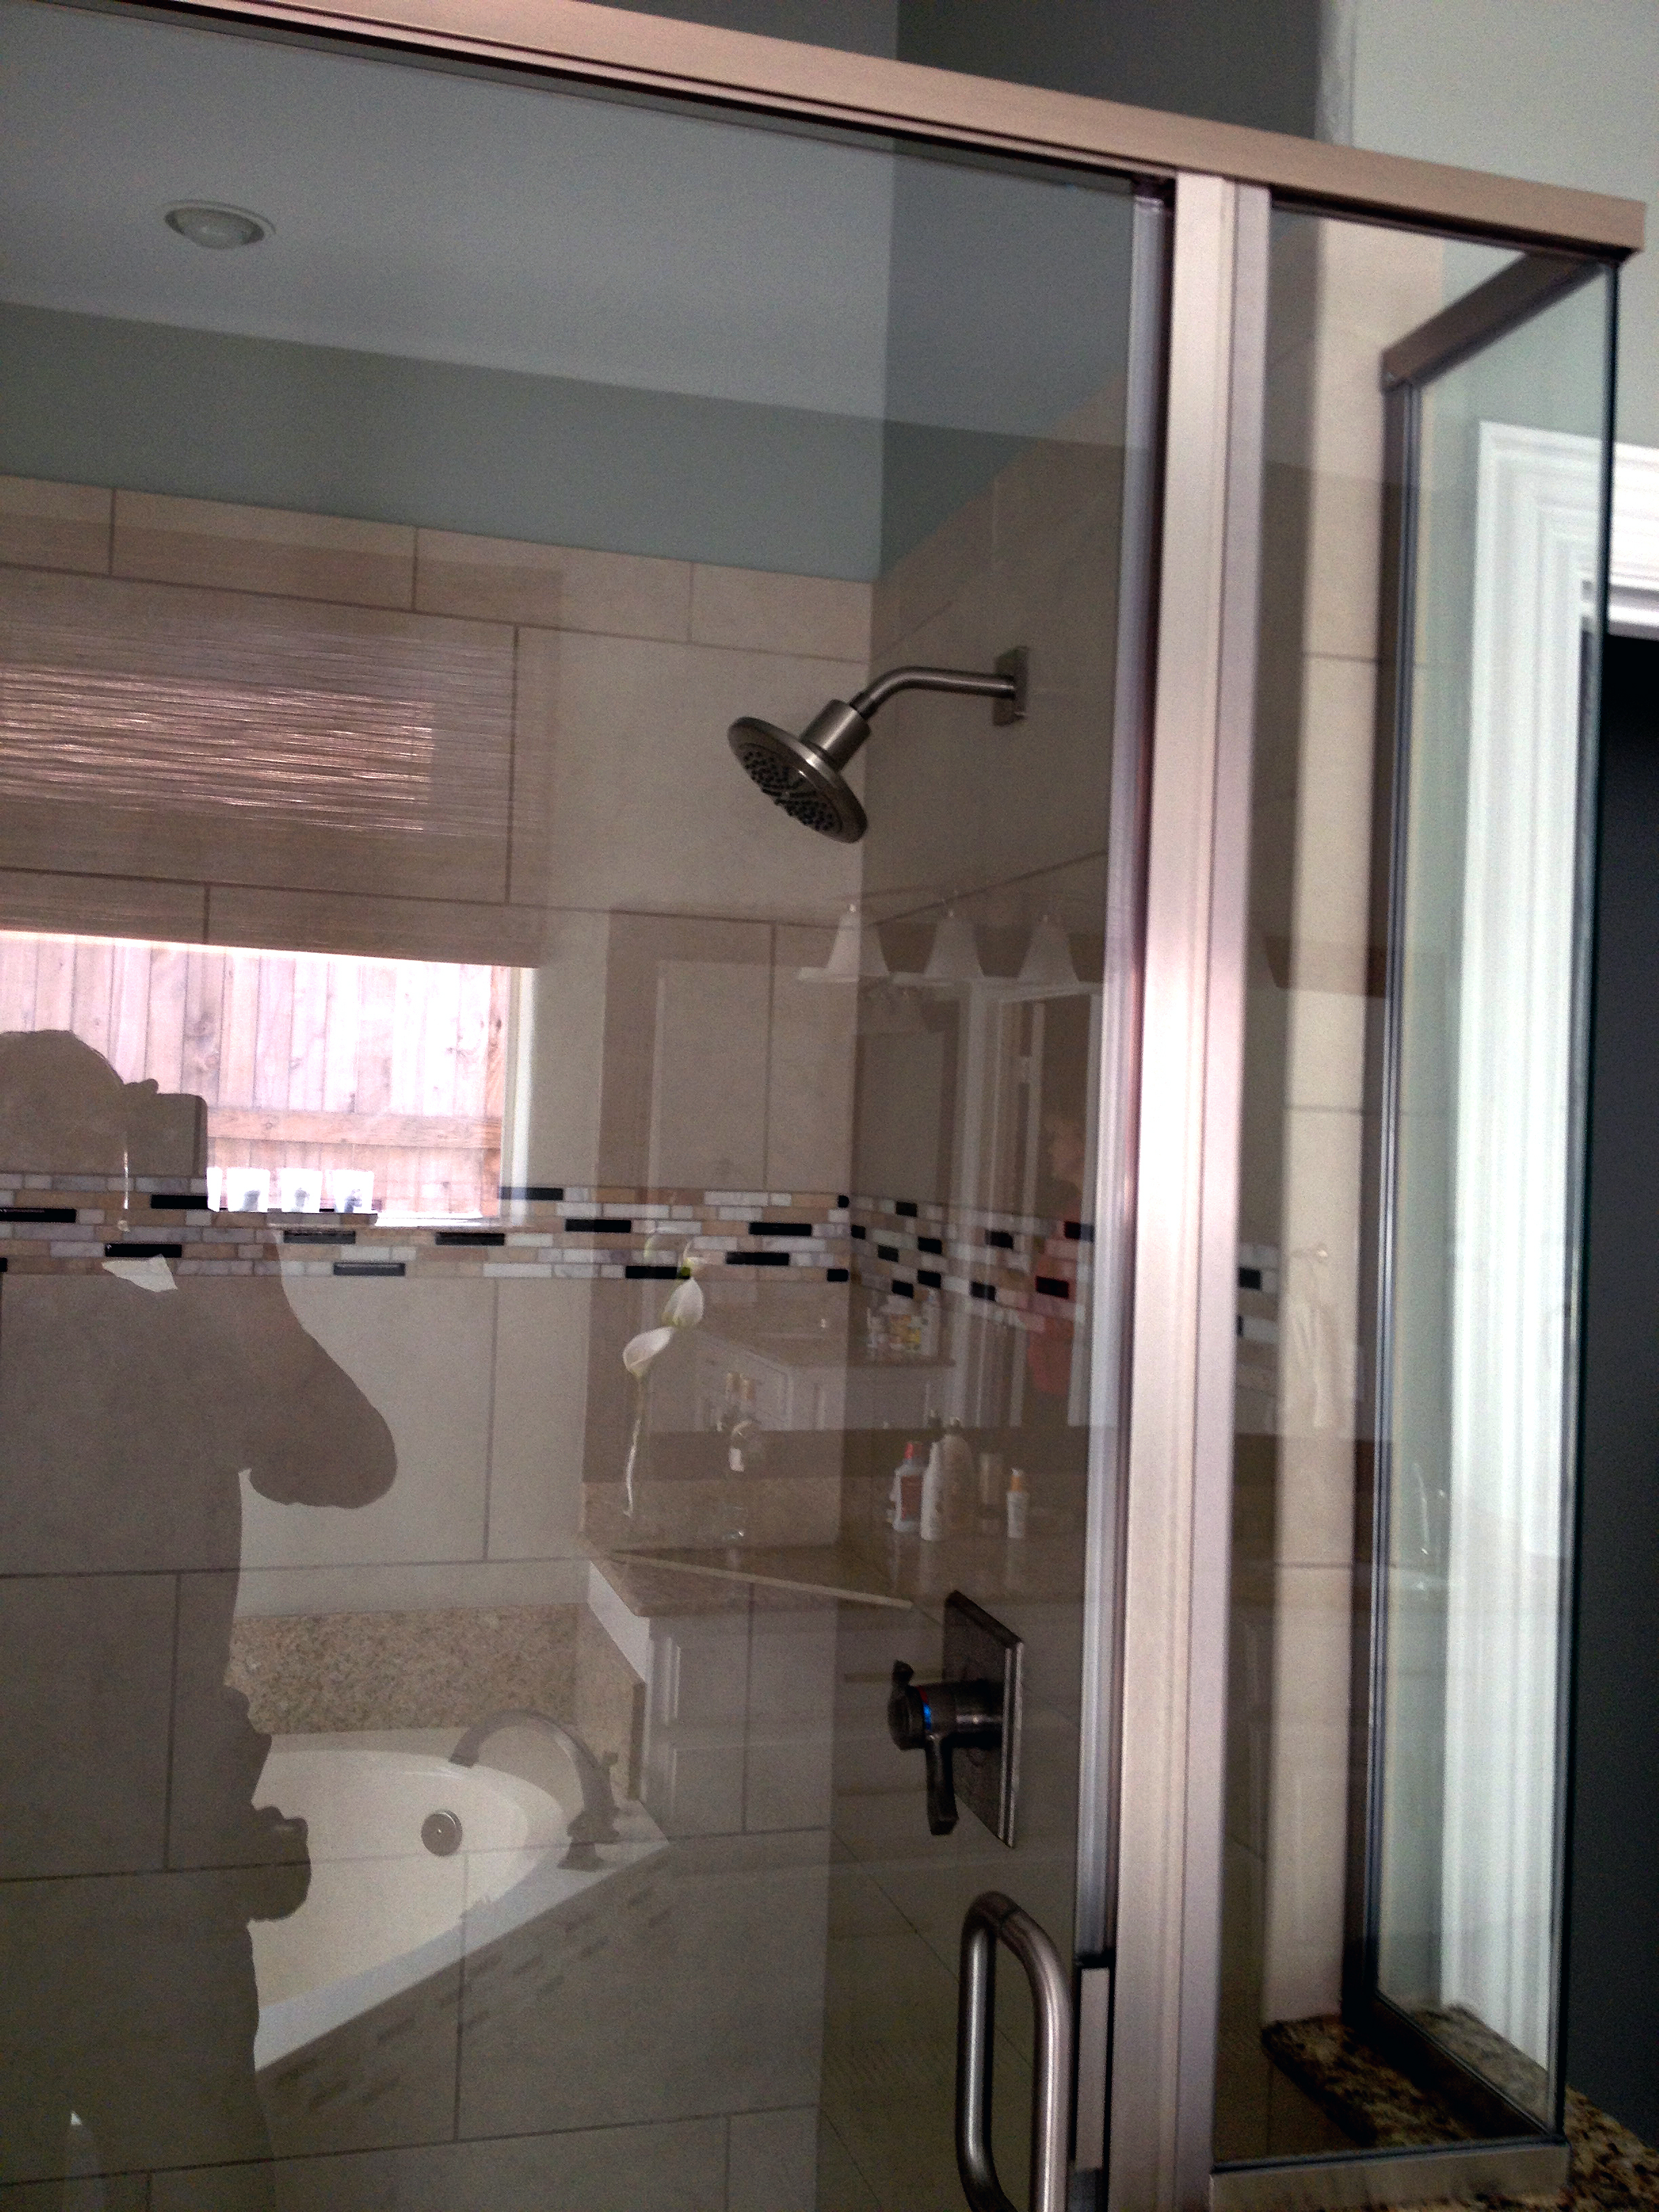 Renassiance Blinds - New Shower/Semi Frameless Glass Enclosure